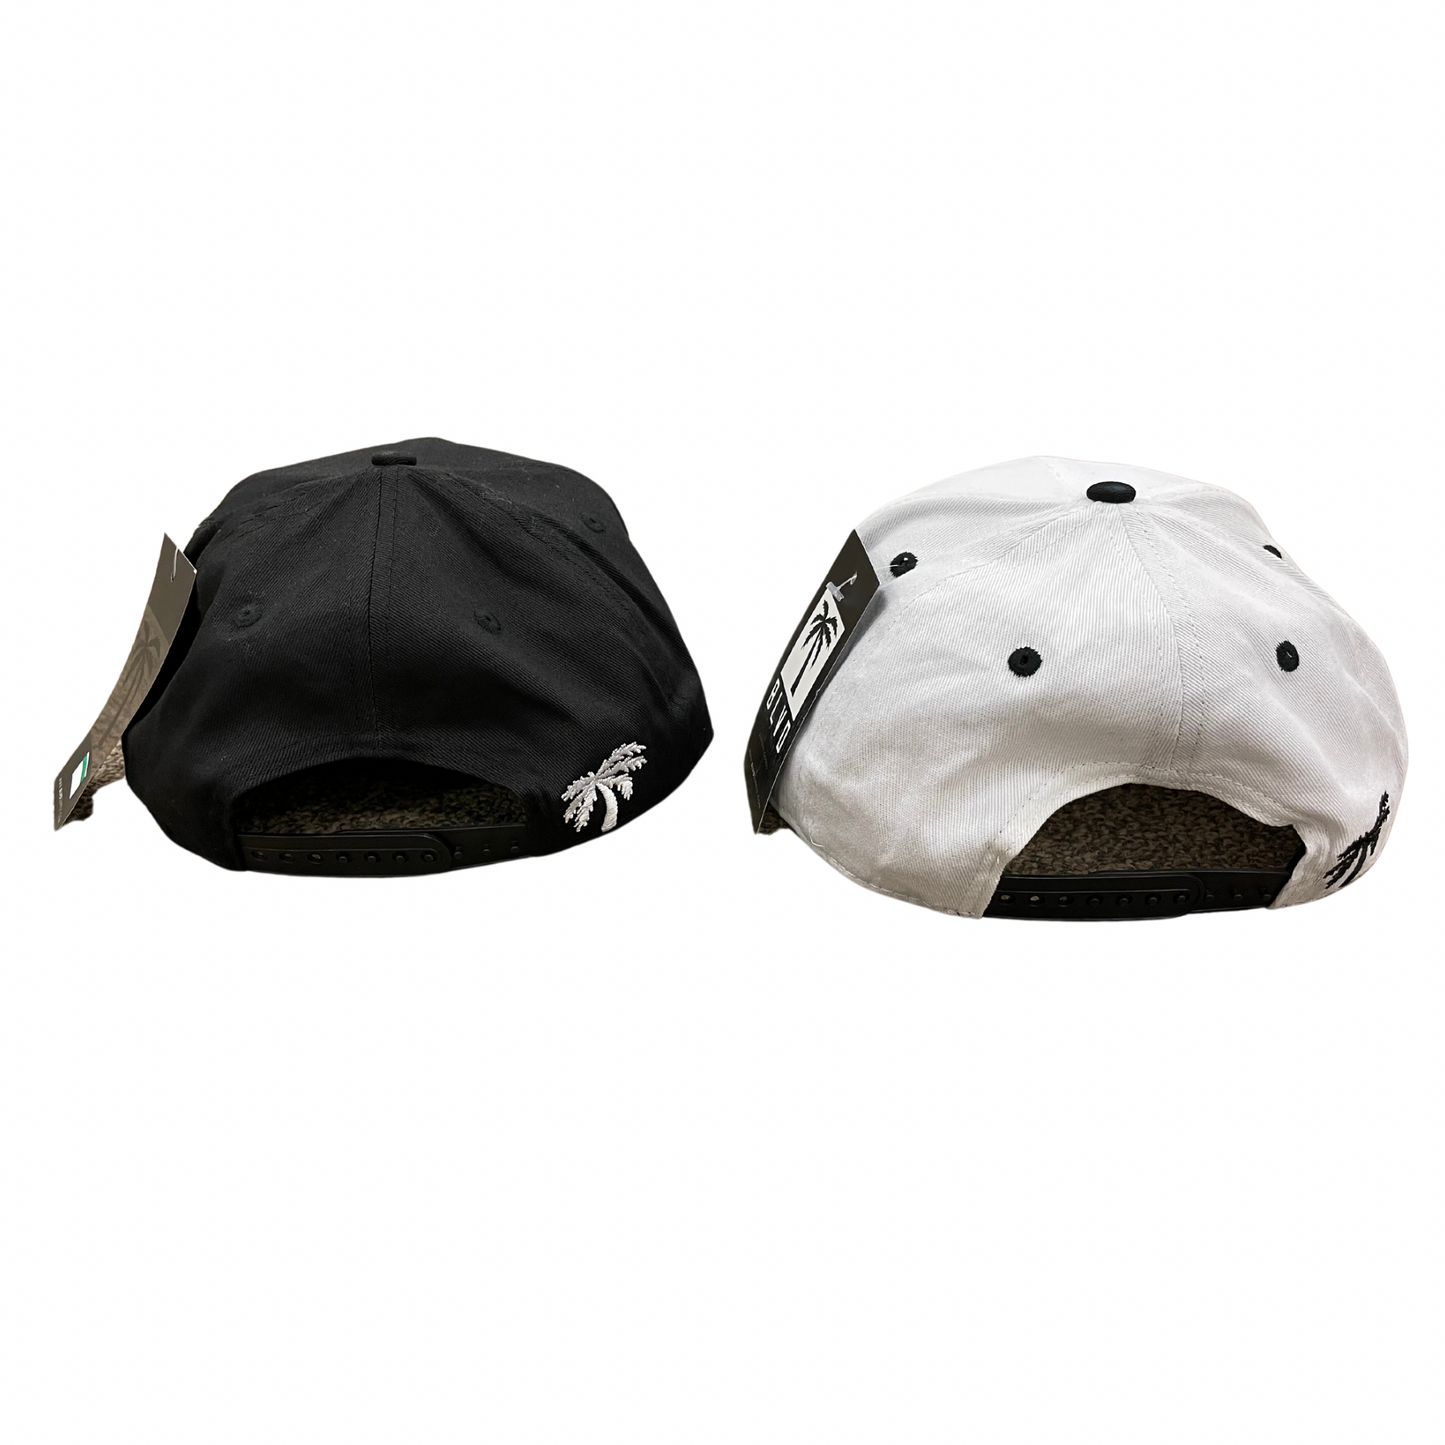 BLVD Snapback Hat (Black or White)